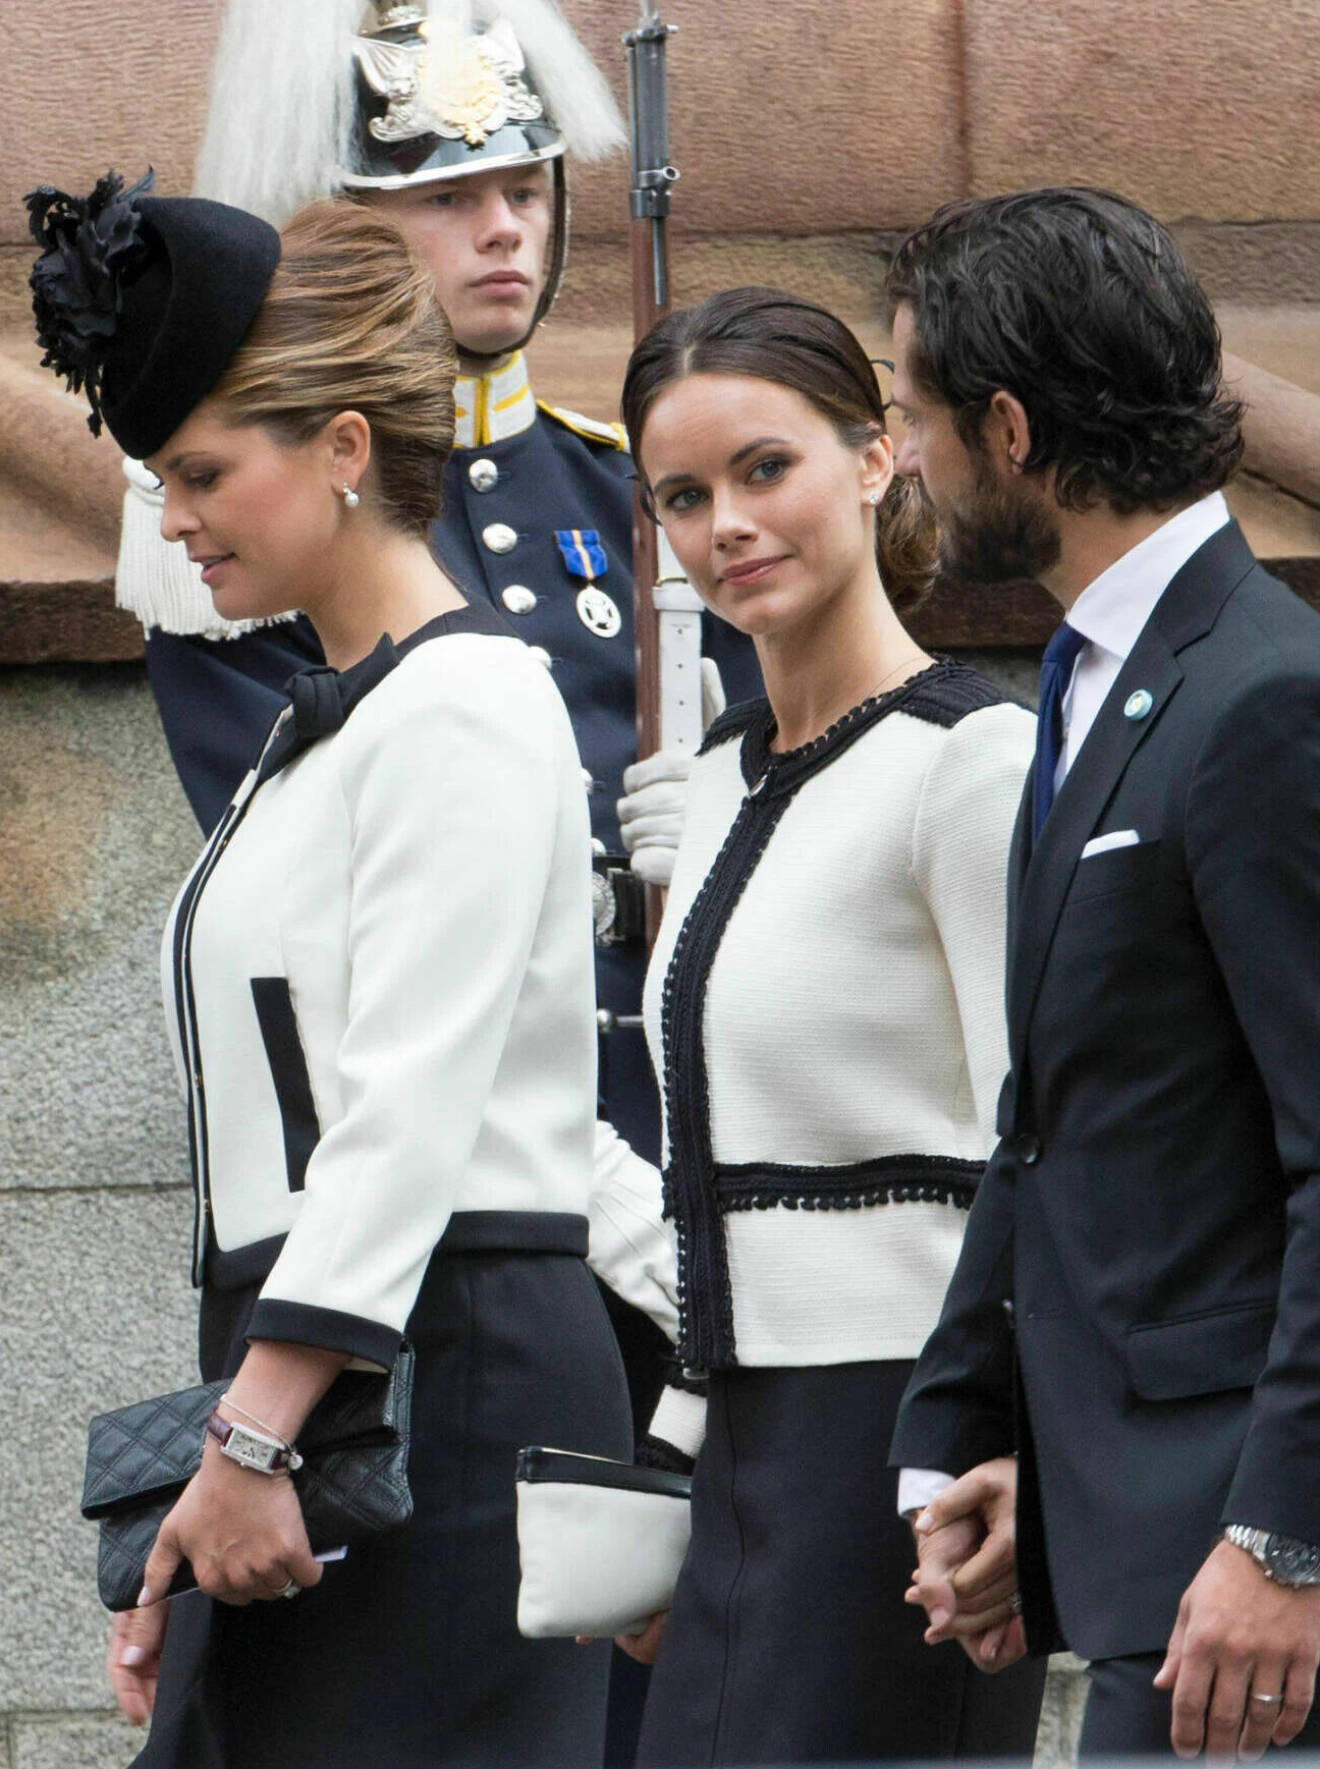 Prinsessan Madeleine och prinsessan Sofia i matchande kläder